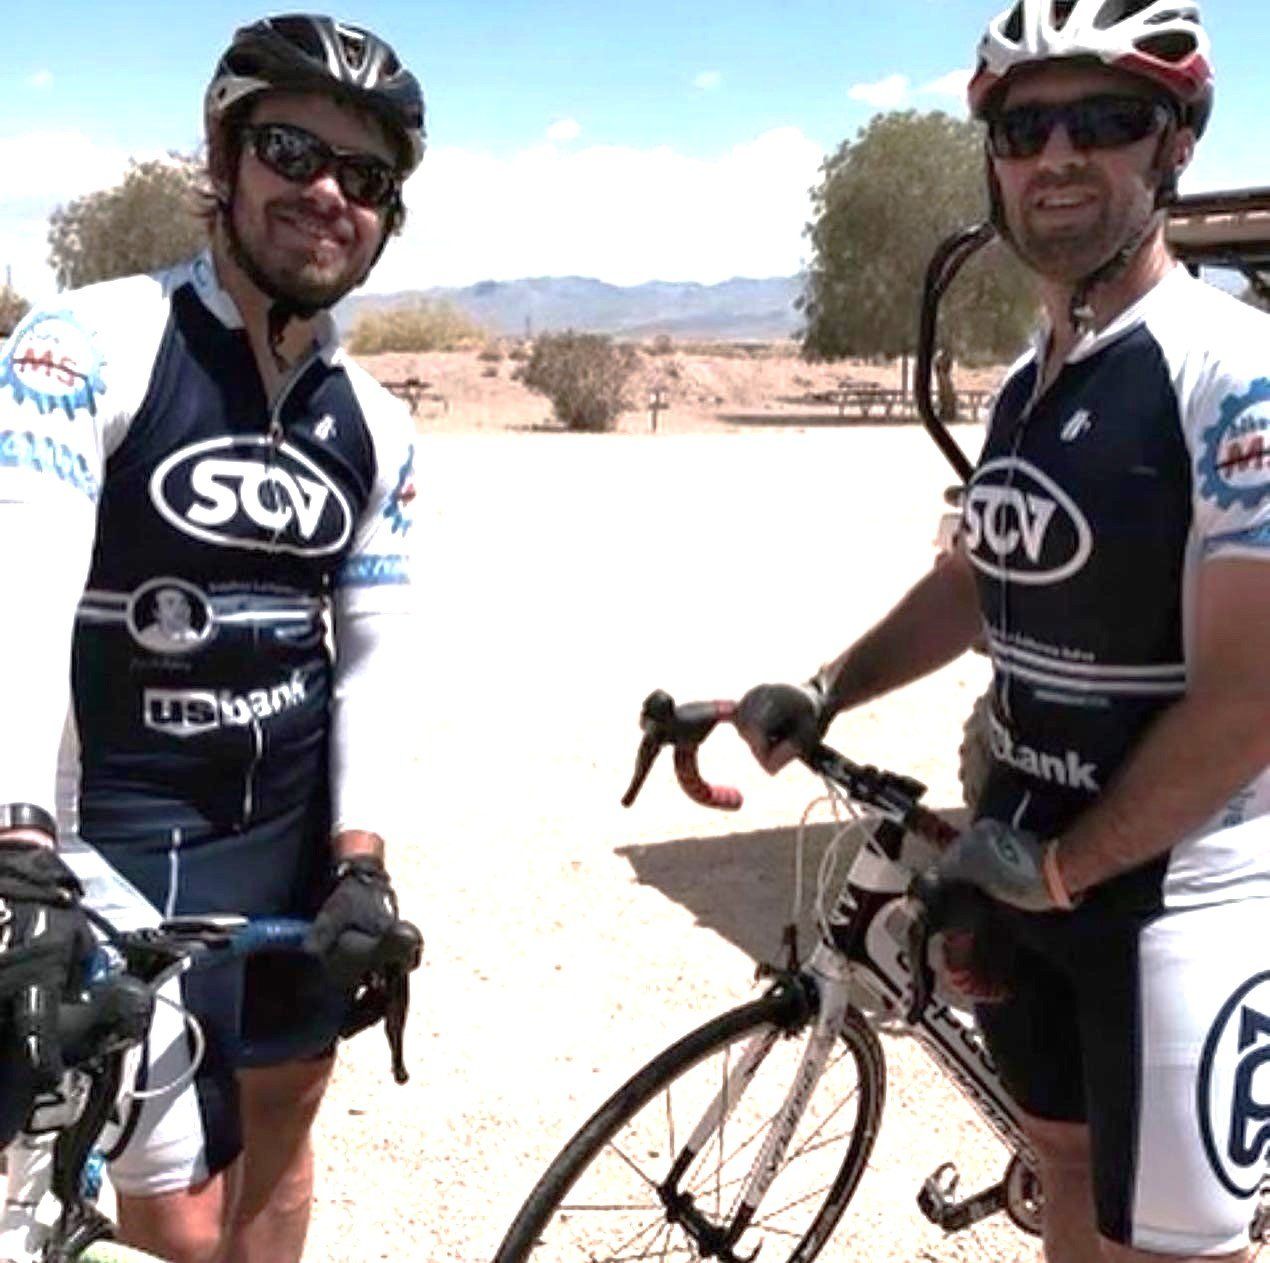 Adam and Matt Bullard riding their back and wearing black and white cycling uniform